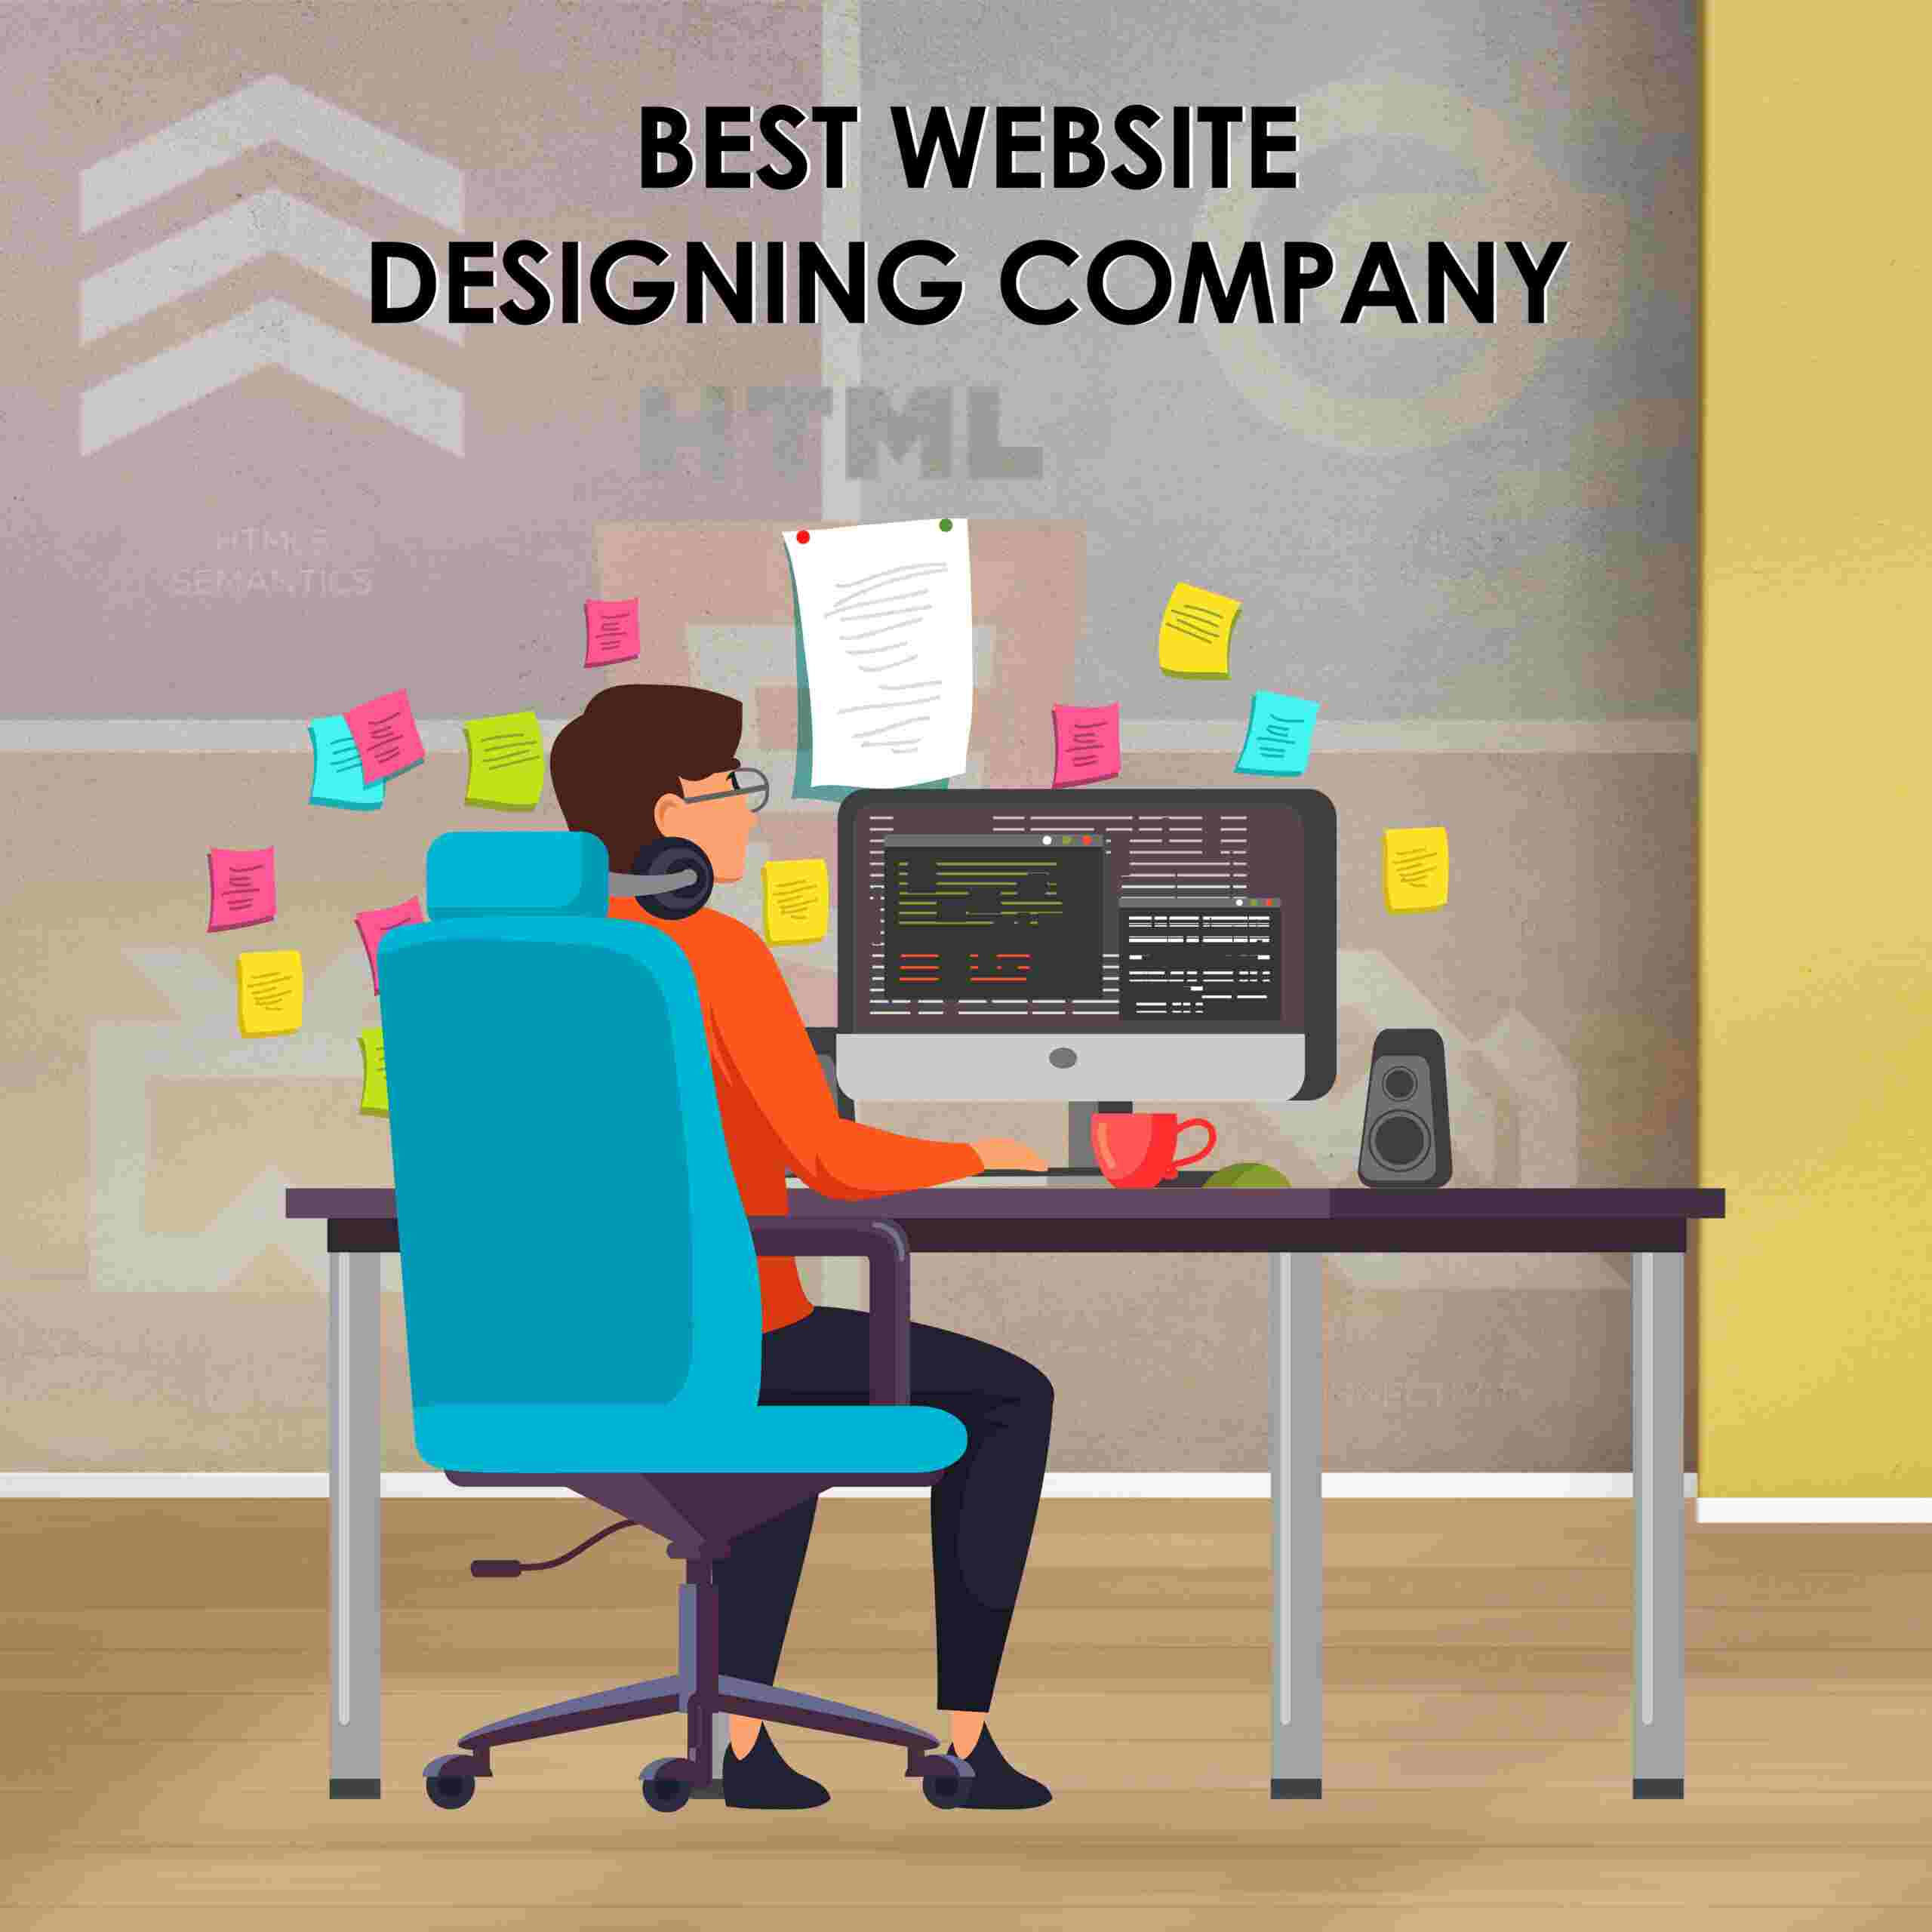 Best Website Designing Company scaled